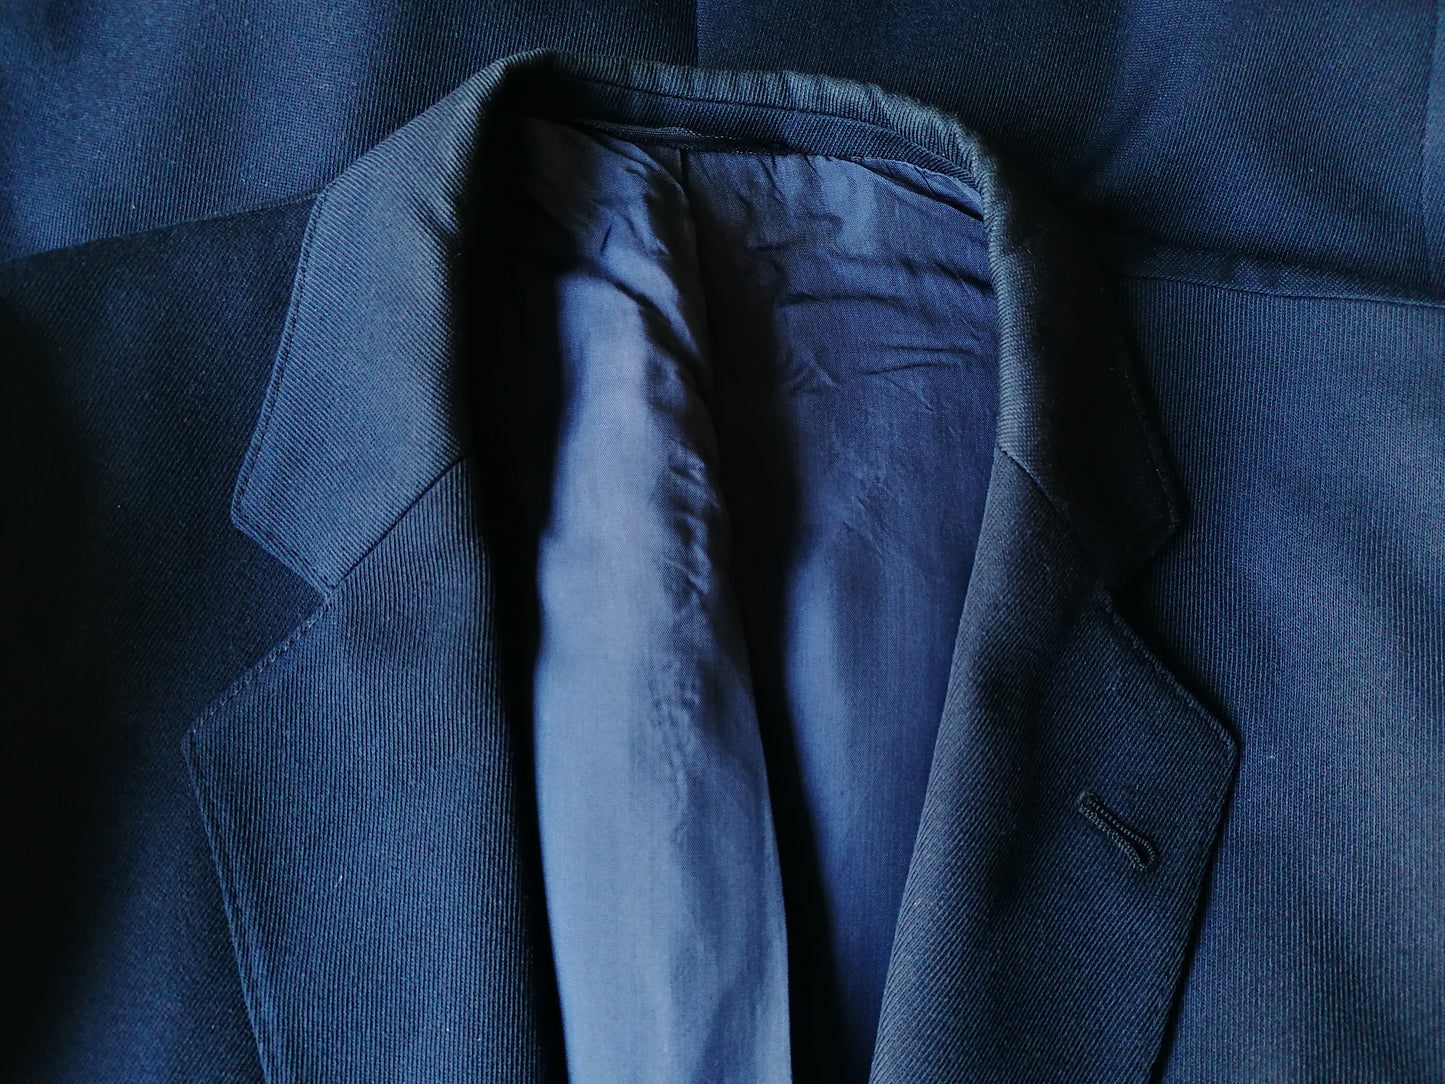 Vintage Wollen Kostuum. Donker Blauw gekleurd. Maat 56 / XL.